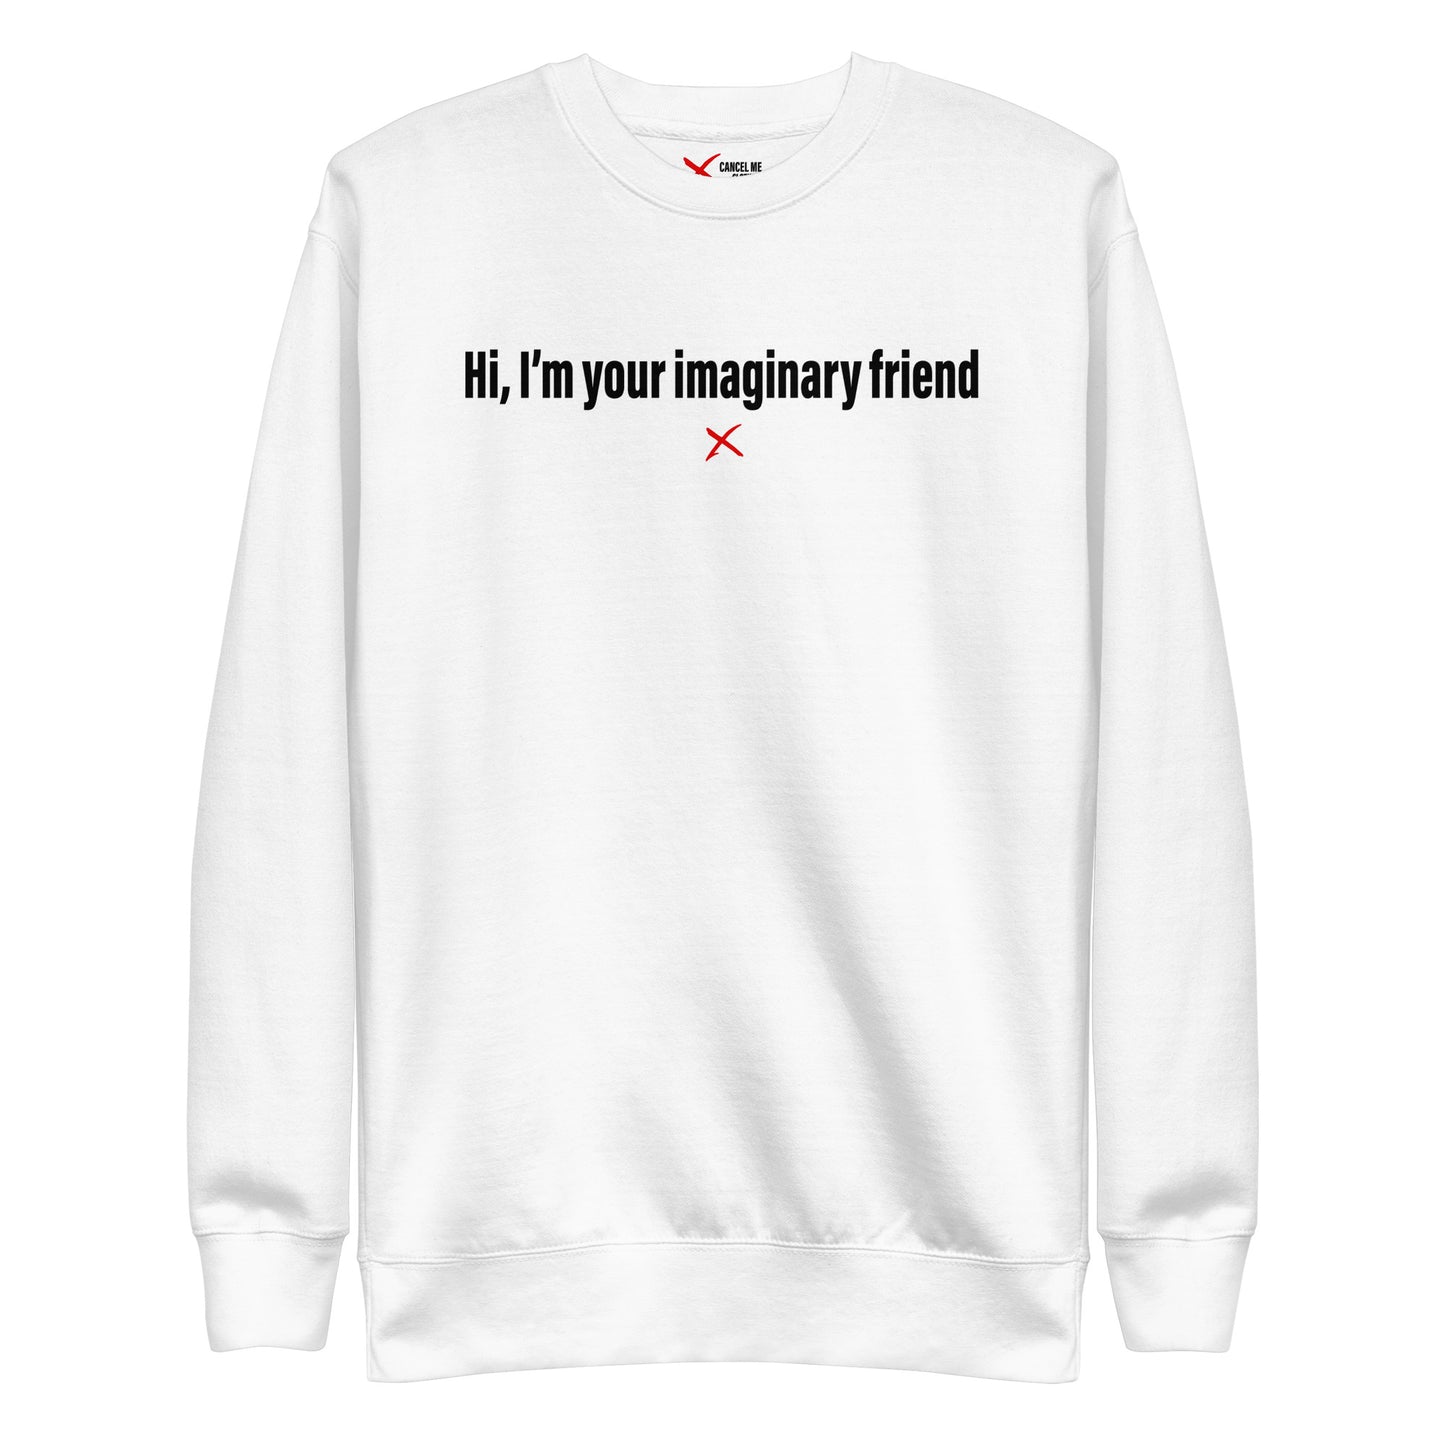 Hi, I'm your imaginary friend - Sweatshirt